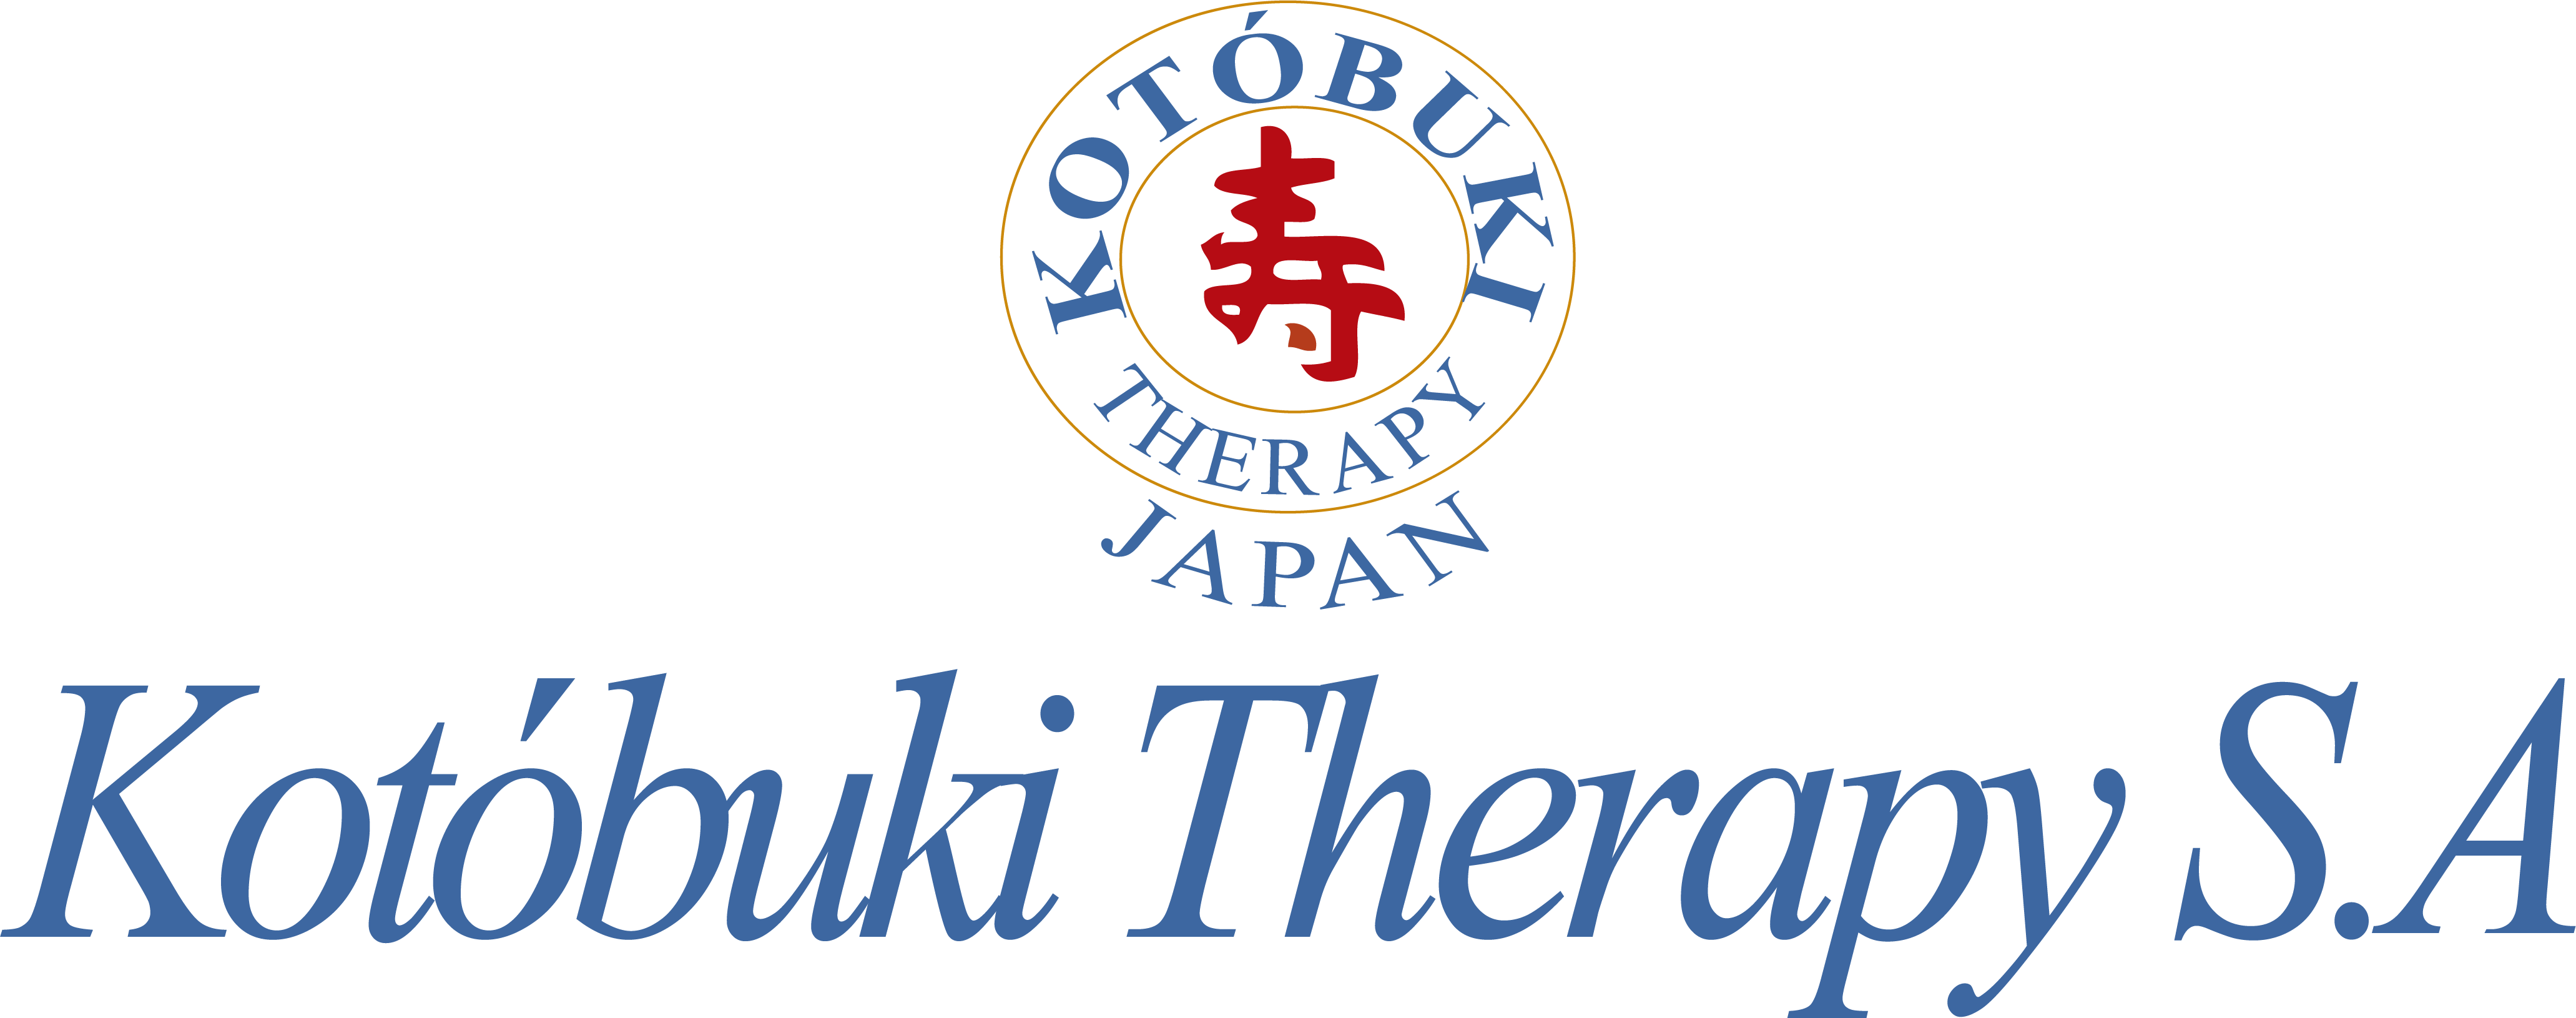 Kotóbuki Therapy